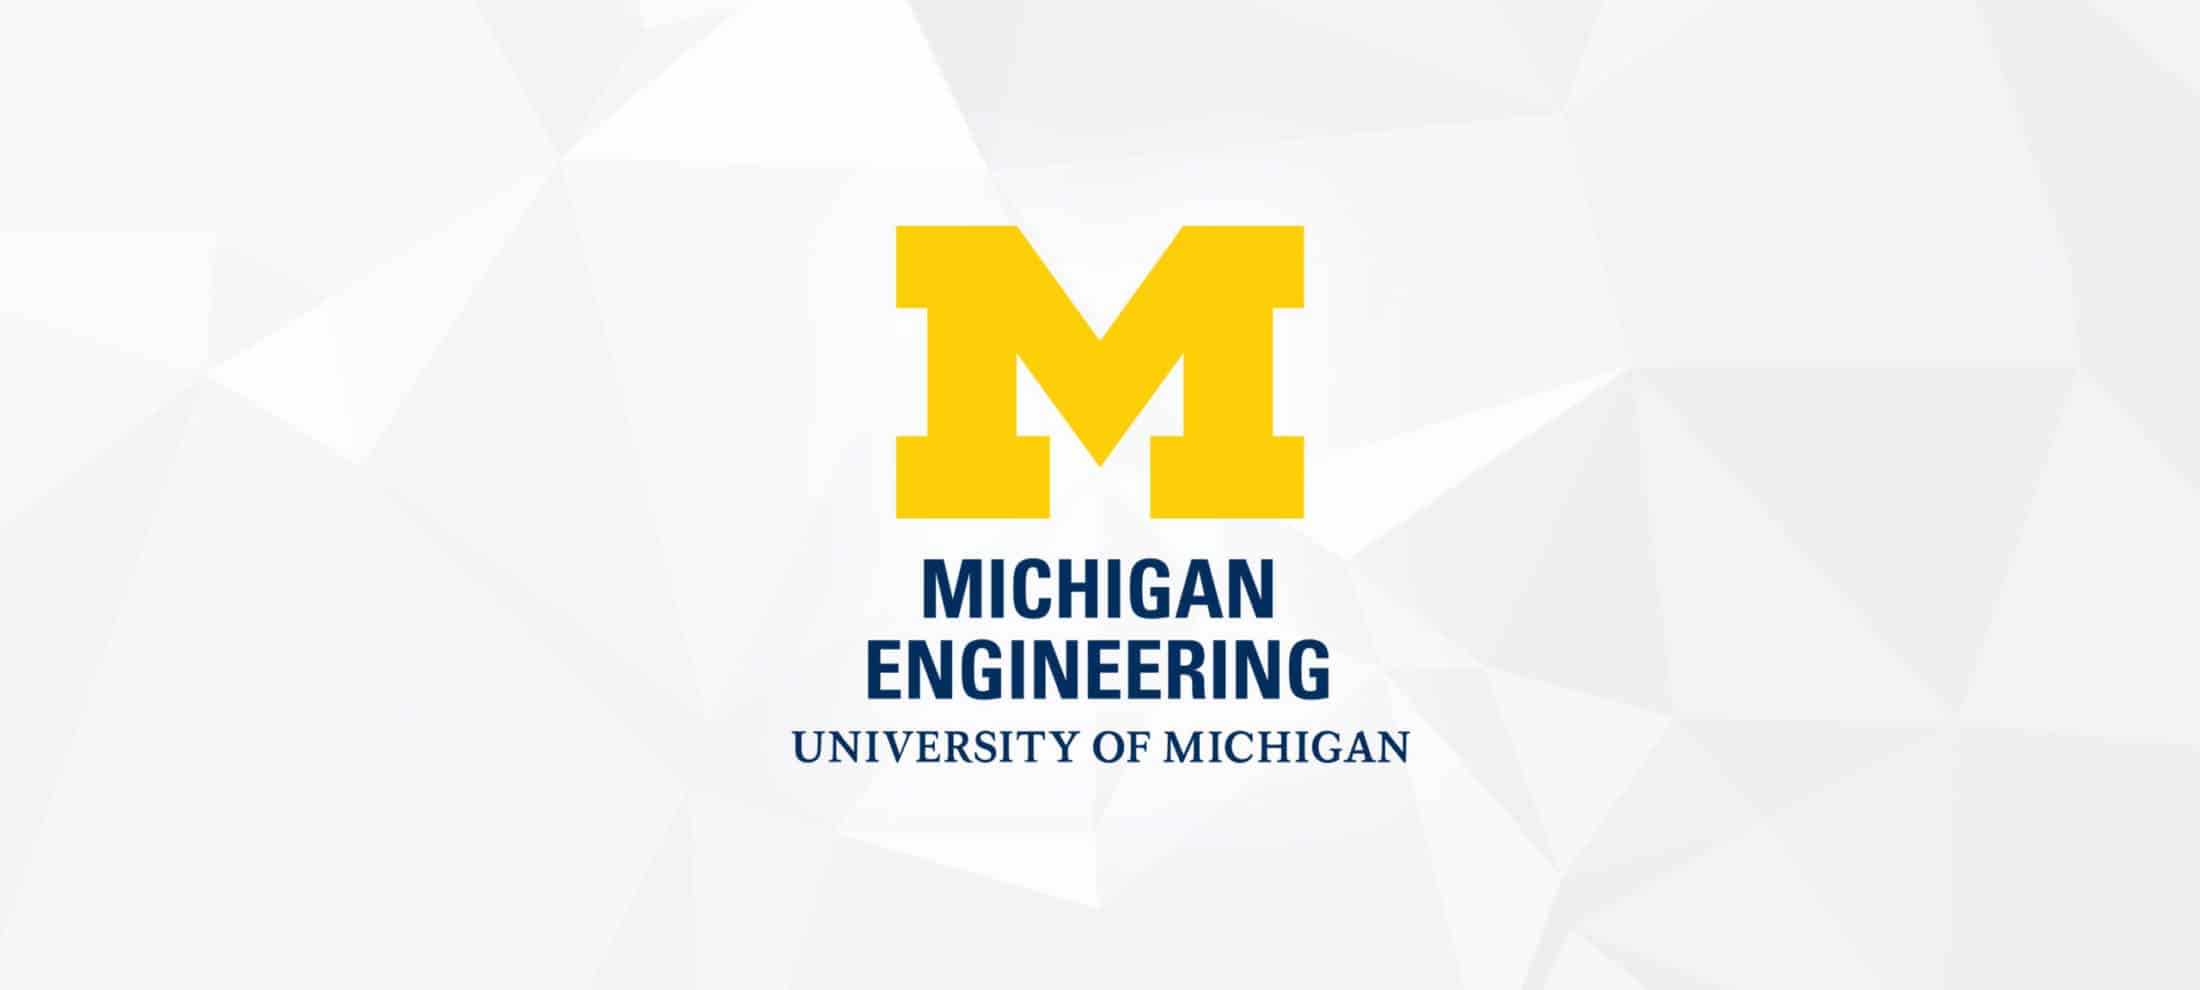 michigan engineering logo